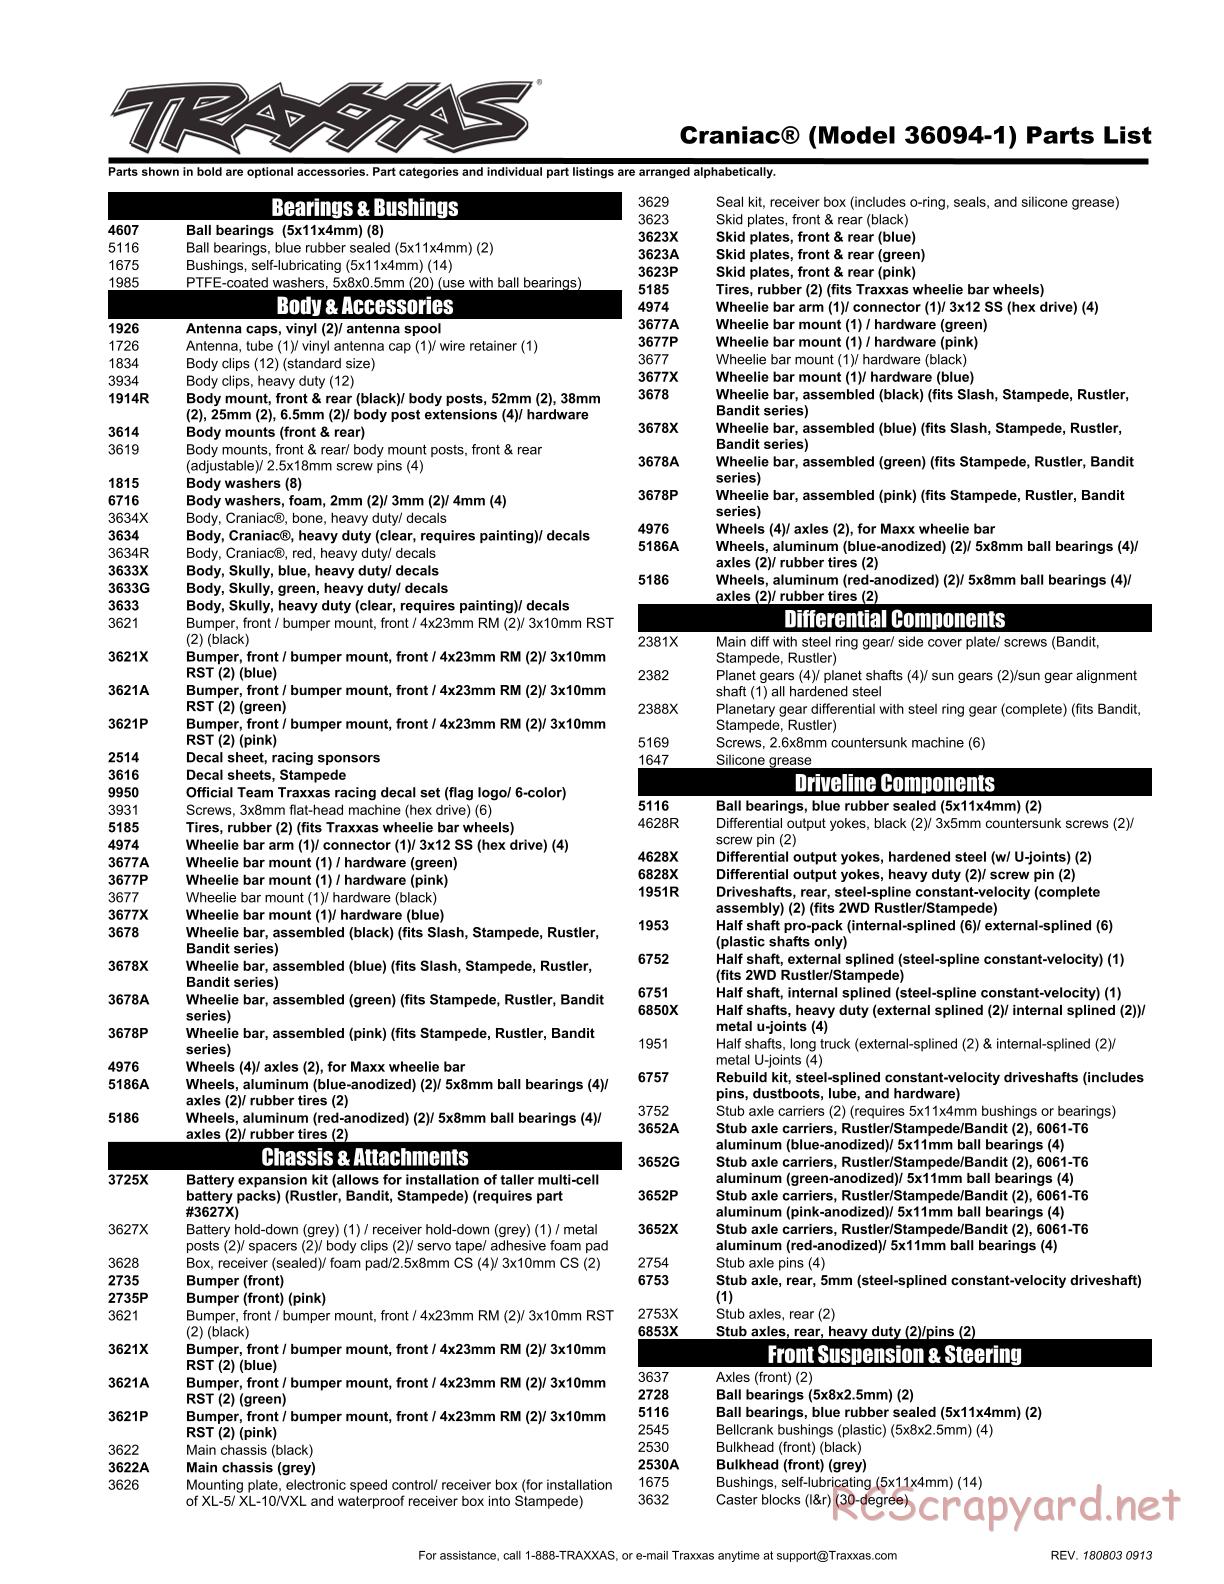 Traxxas - Craniac - Parts List - Page 1